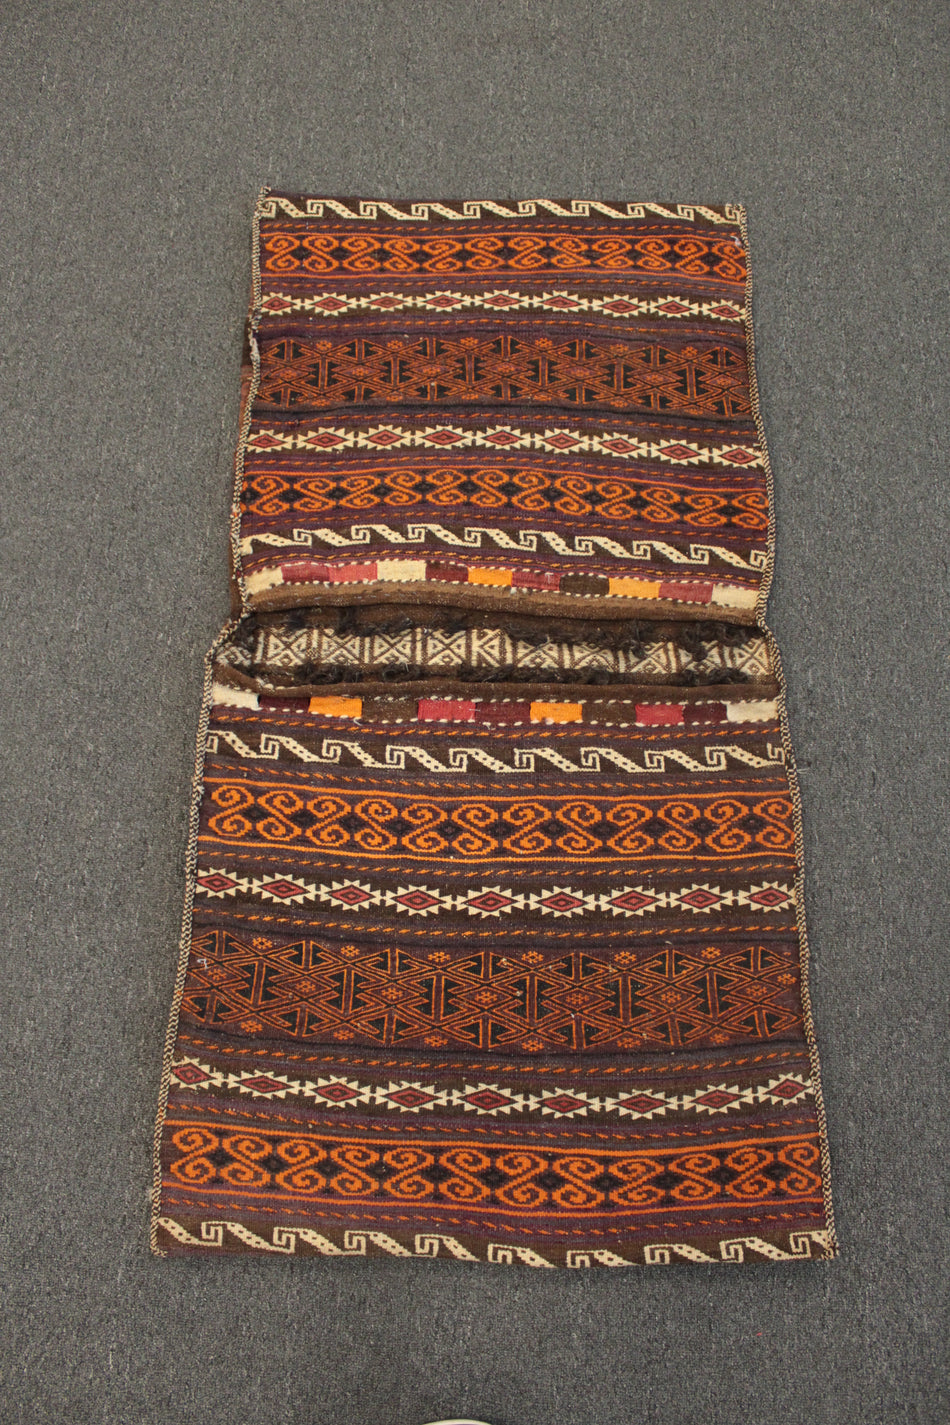 Handmade Afghan Saddle Bag - 133 cm x 67 cm